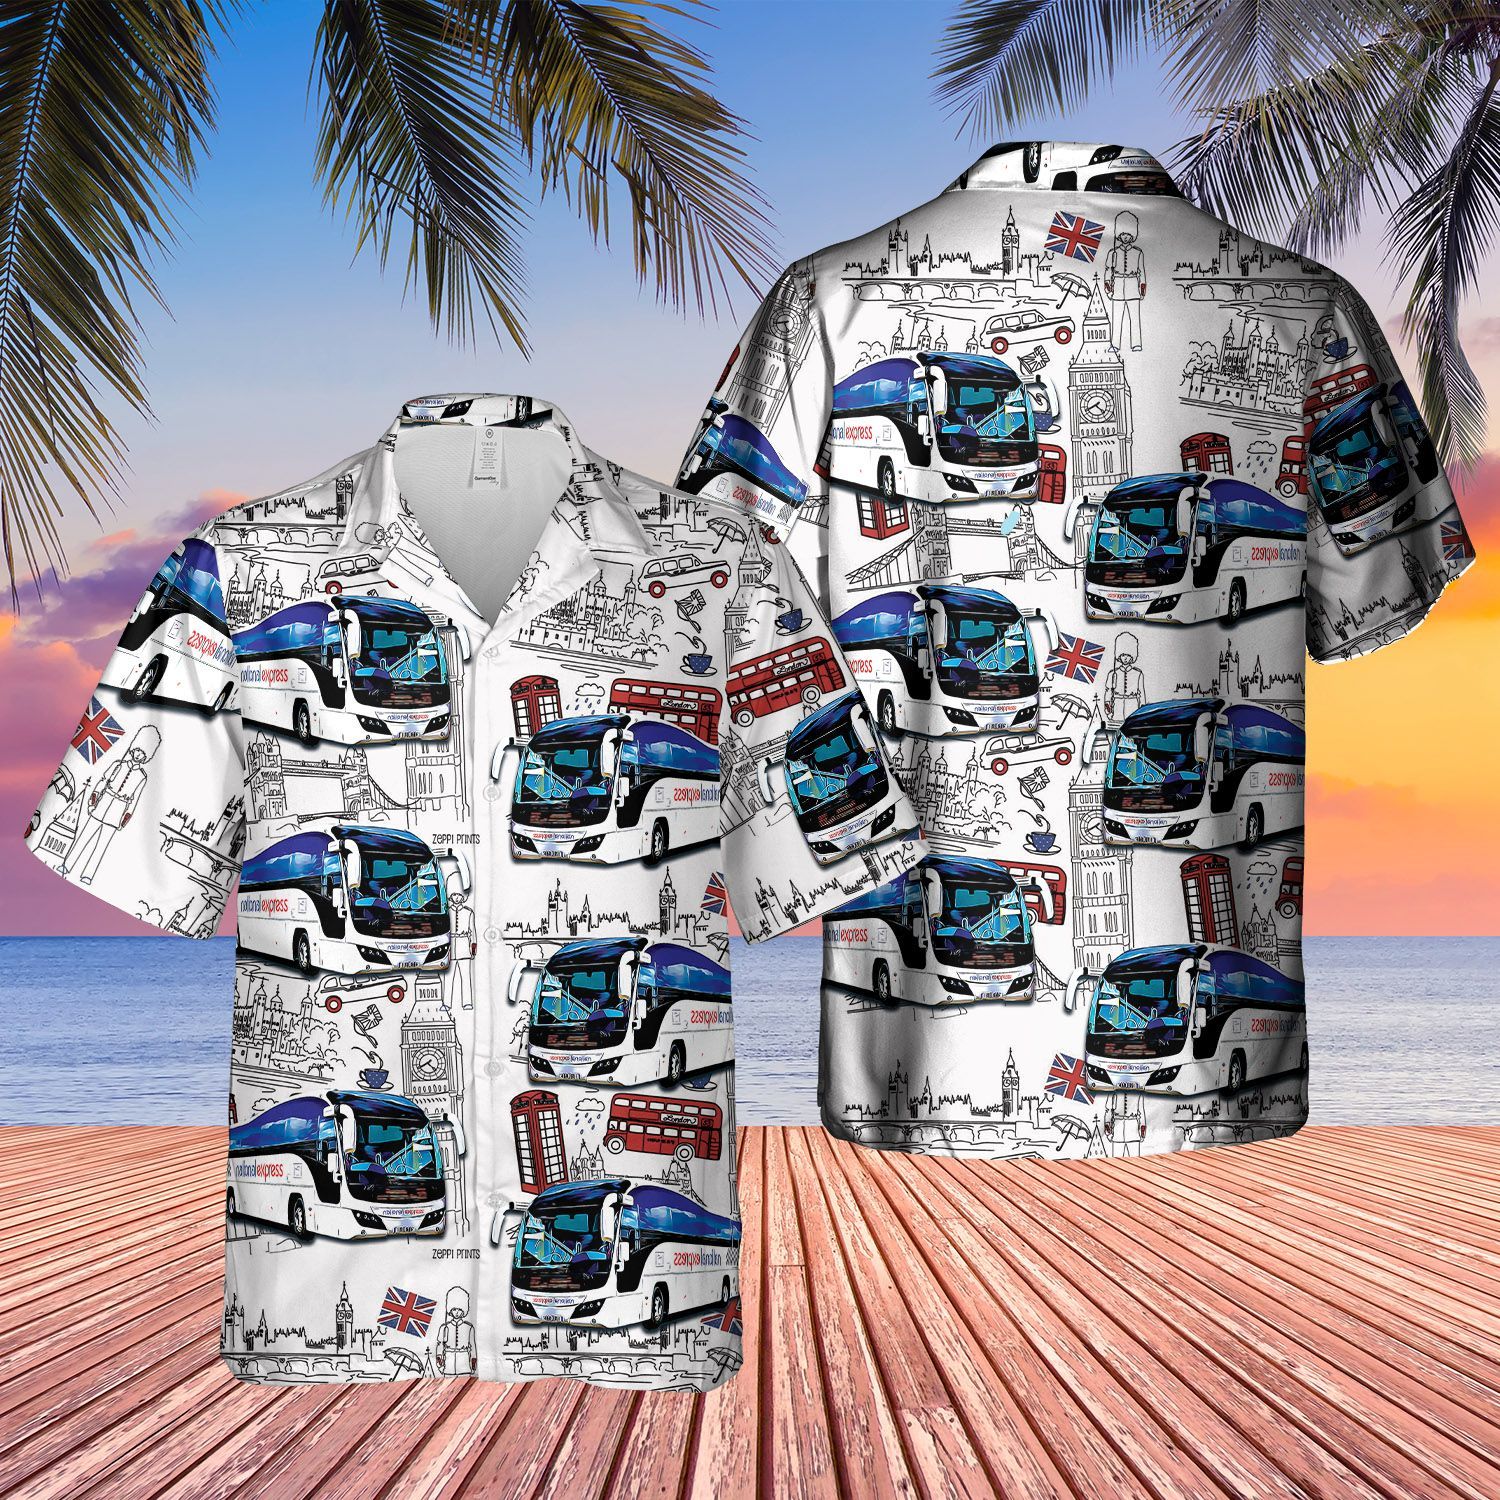 Enjoy your summer with top cool hawaiian shirt below 132